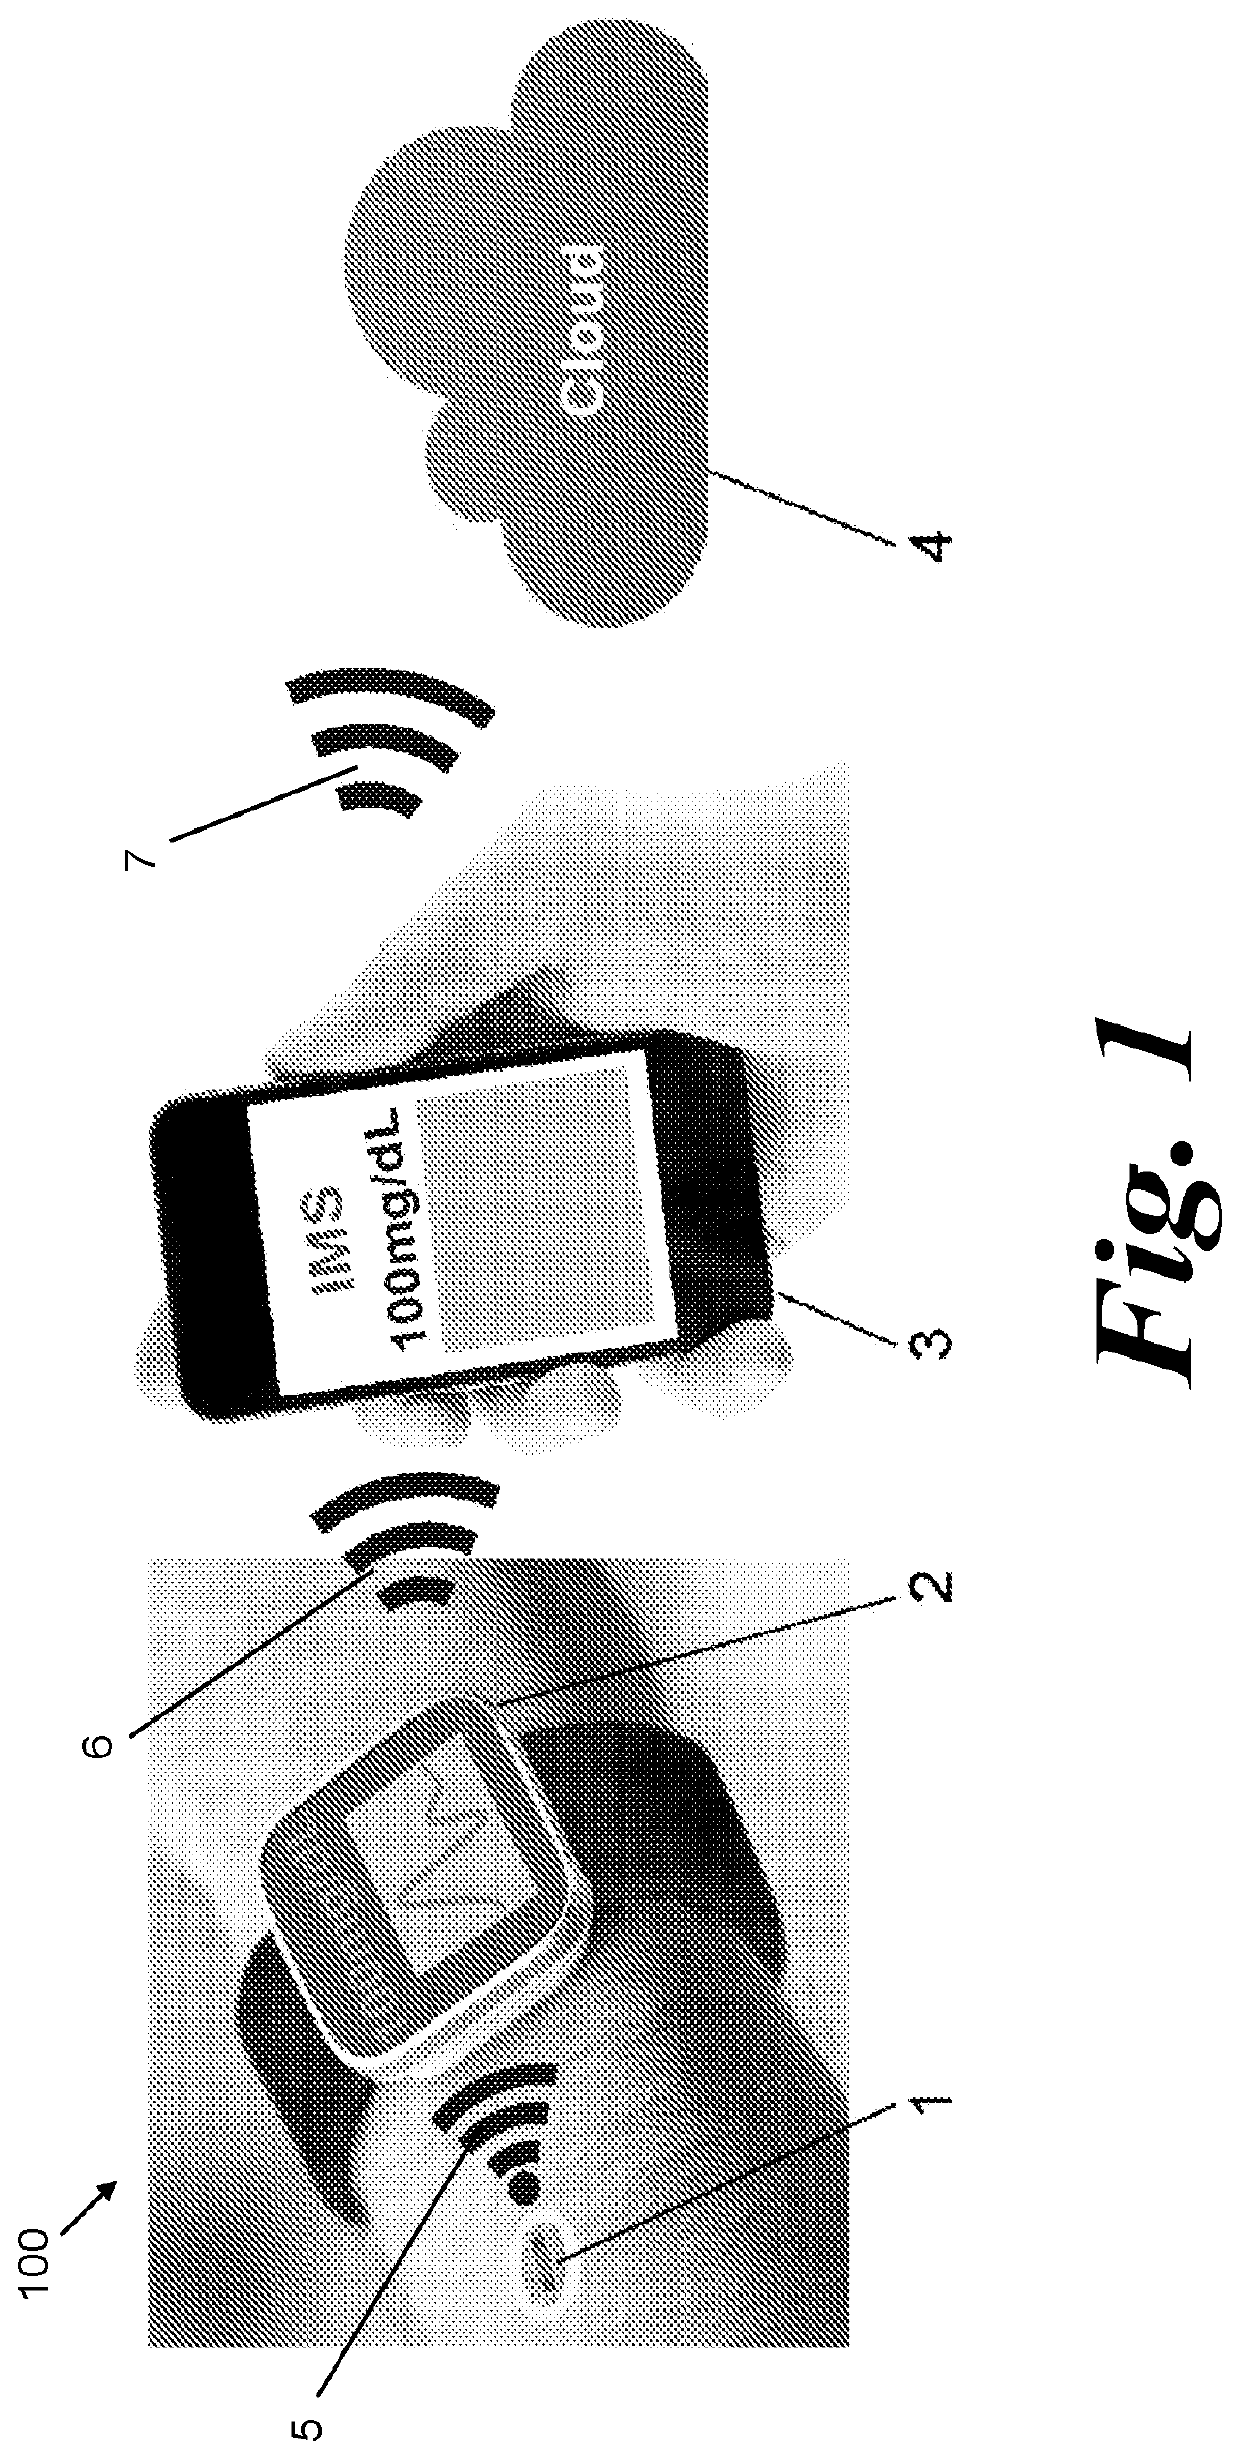 Wireless sensing platform for multi-analyte sensing